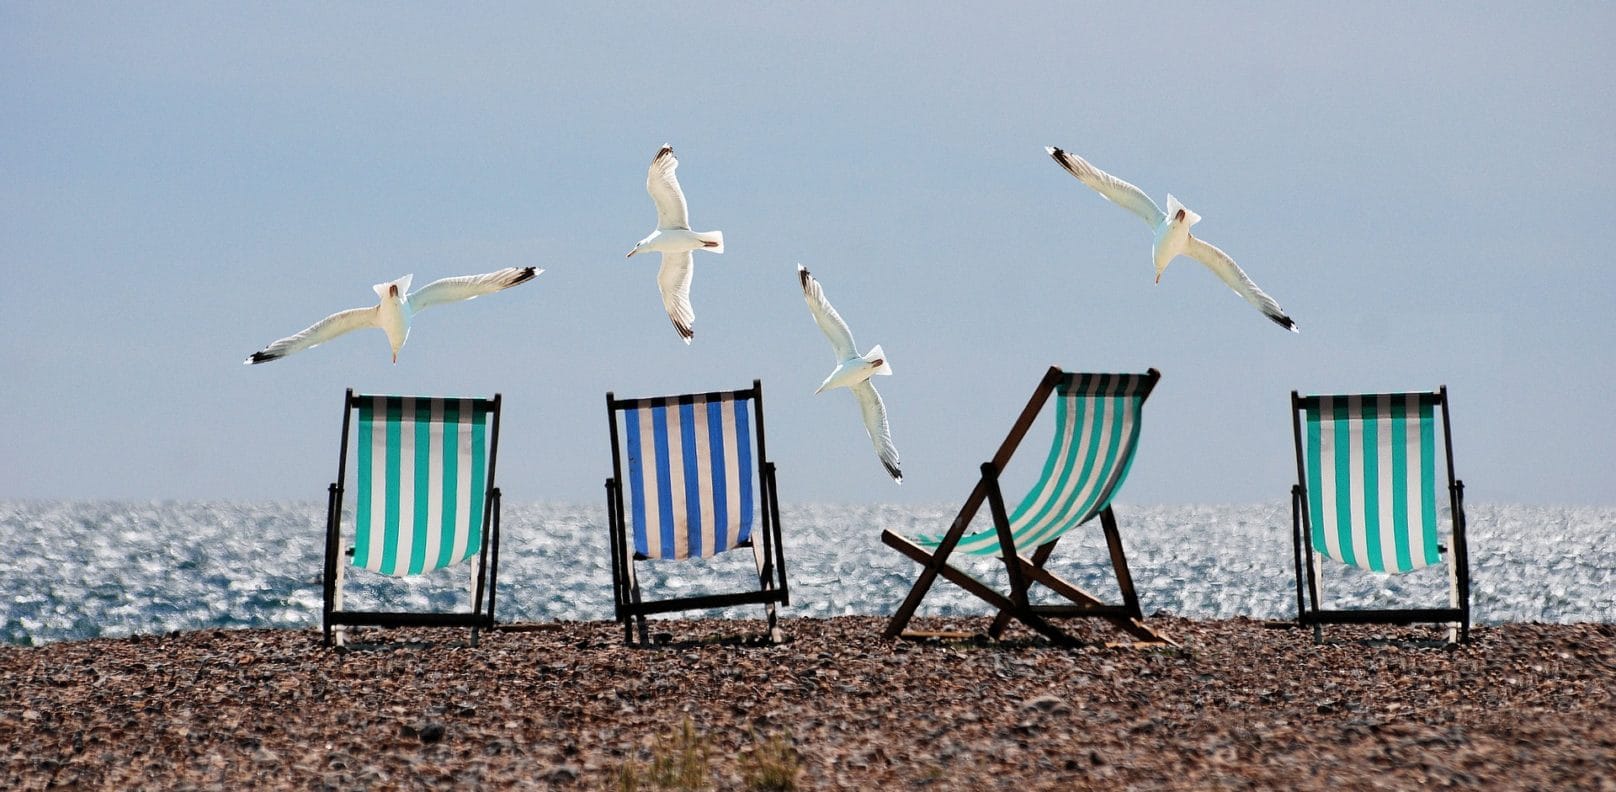 Seagulls and deckchairs on a beach